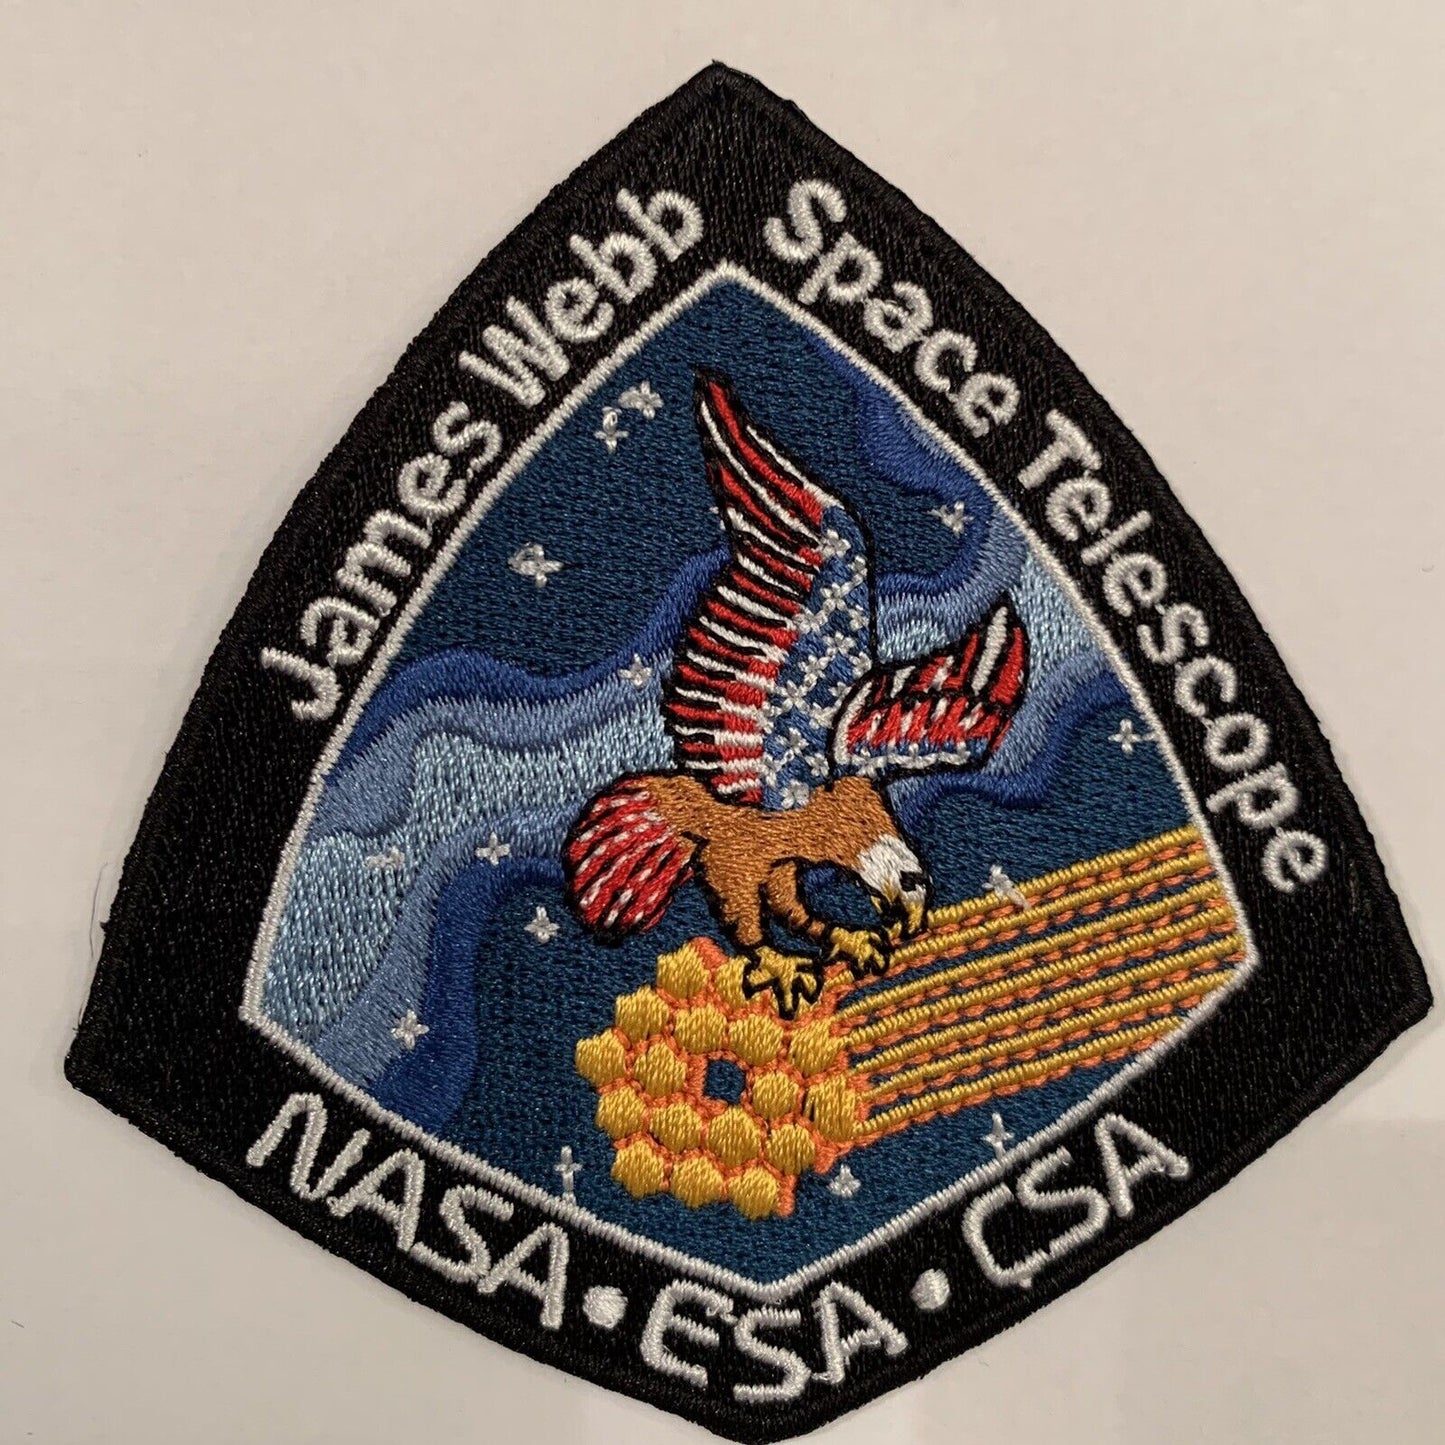 JAMES WEBB SPACE TELESCOPE -JWST - NASA MISSION PATCH -GODDARD SPACE CENTER 3.5”